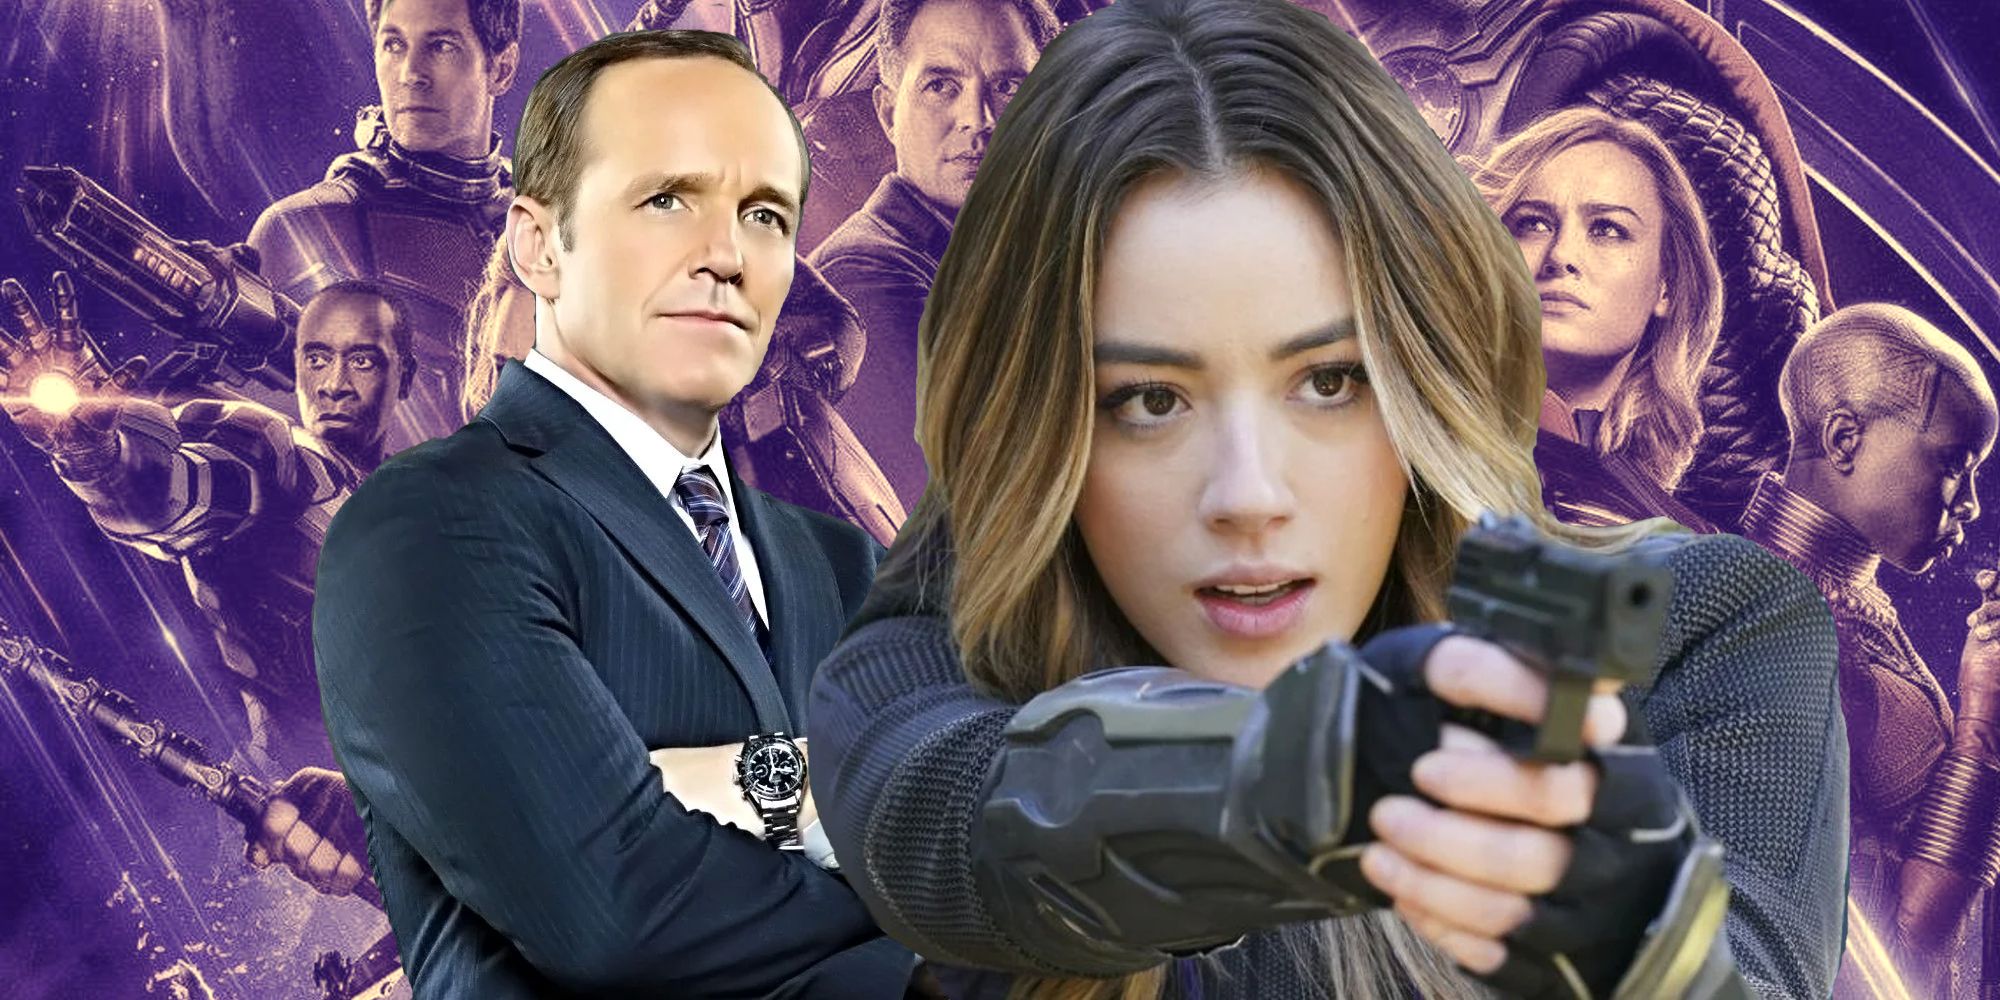 Agents of S.H.I.E.L.D. Turn, Turn, Turn (TV Episode 2014) - Clark